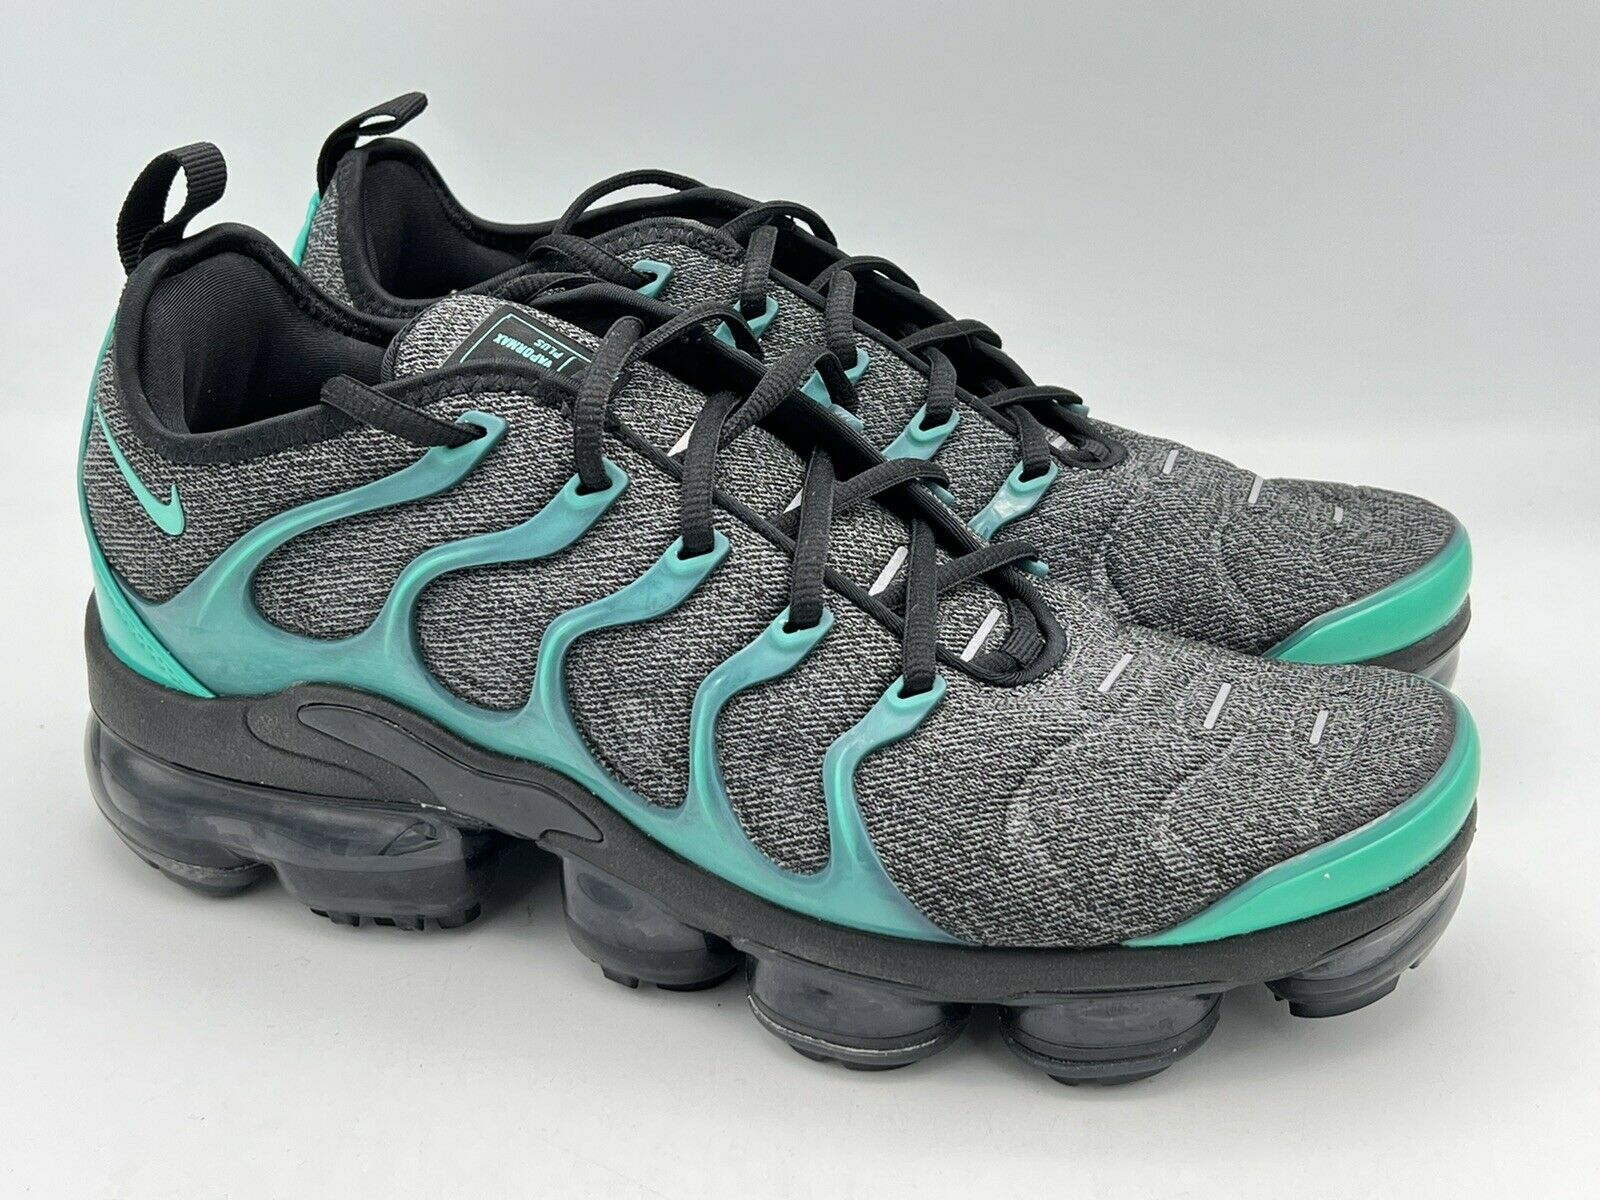 New Nike Air Vapormax Plus Eagles Black Green Running Shoes 924453-013 Mens 13